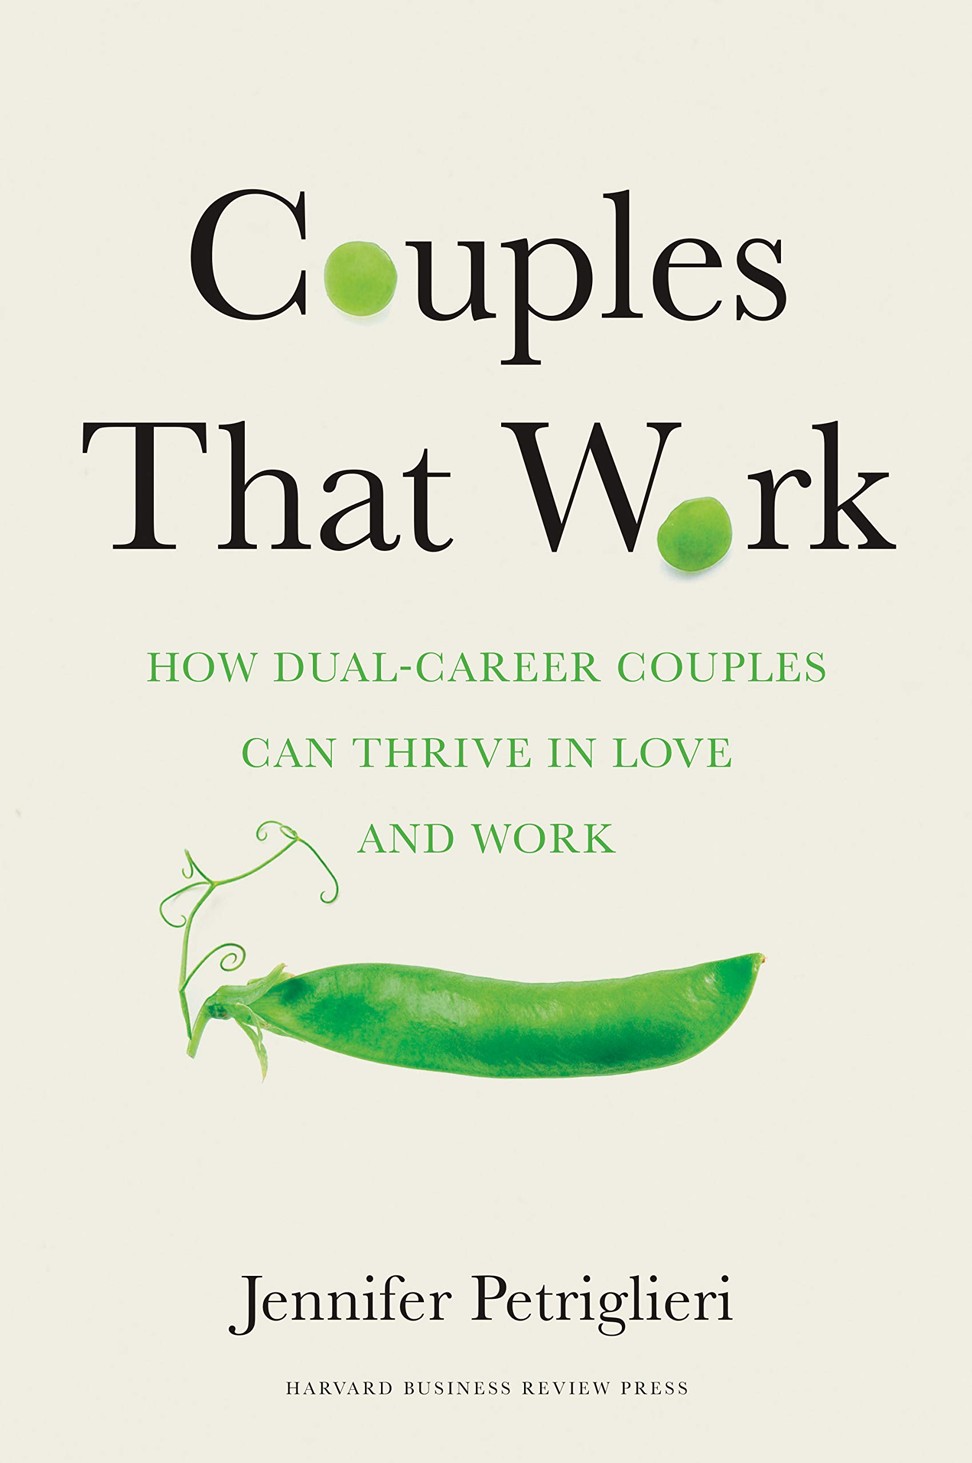 Jennifer Petriglieri, associate professor of organisational behaviour at Insead, wrote the book Couples That Work.